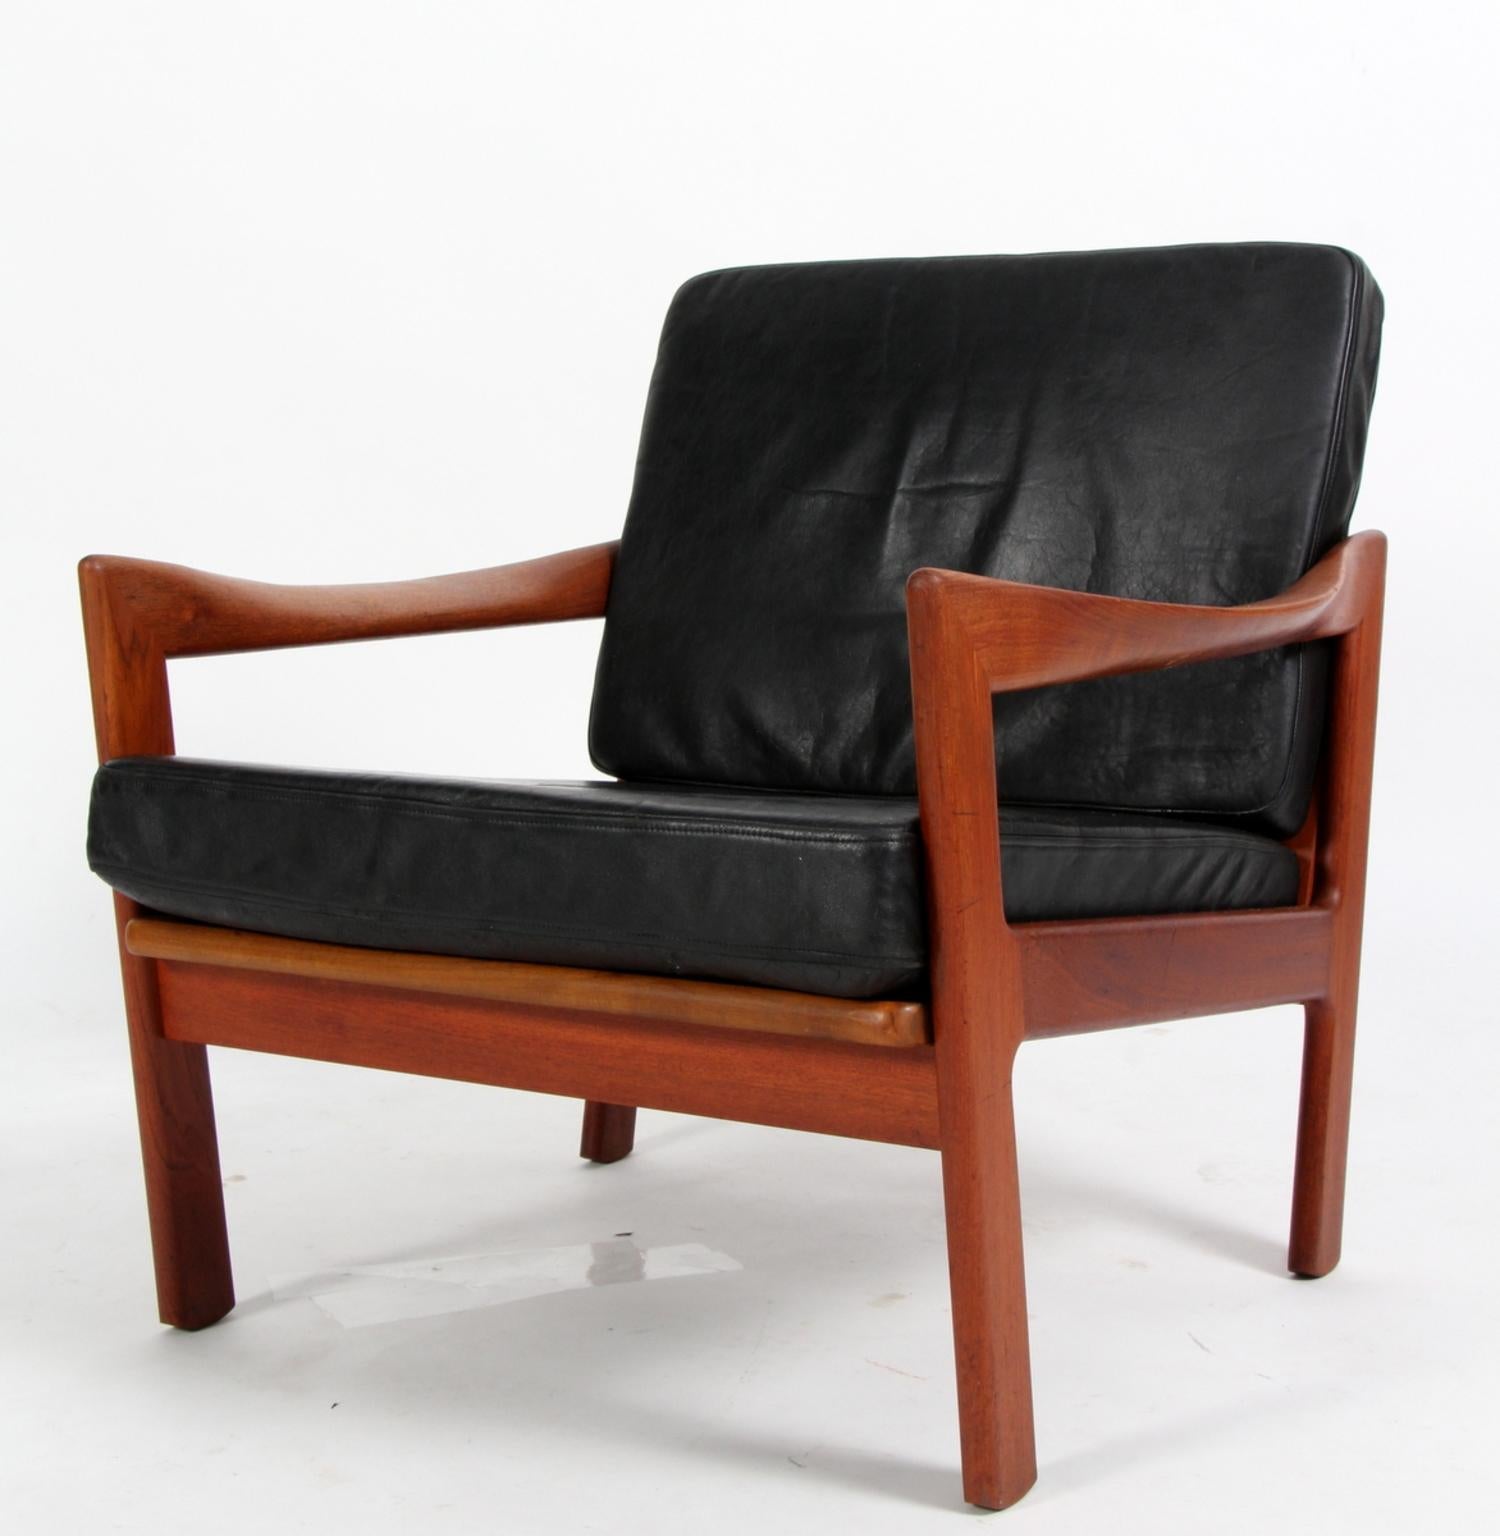 Scandinavian Modern Pair of Illum Wikkelsø for N. Eilersen Lounge Chairs, Model 20, in Solid Teak